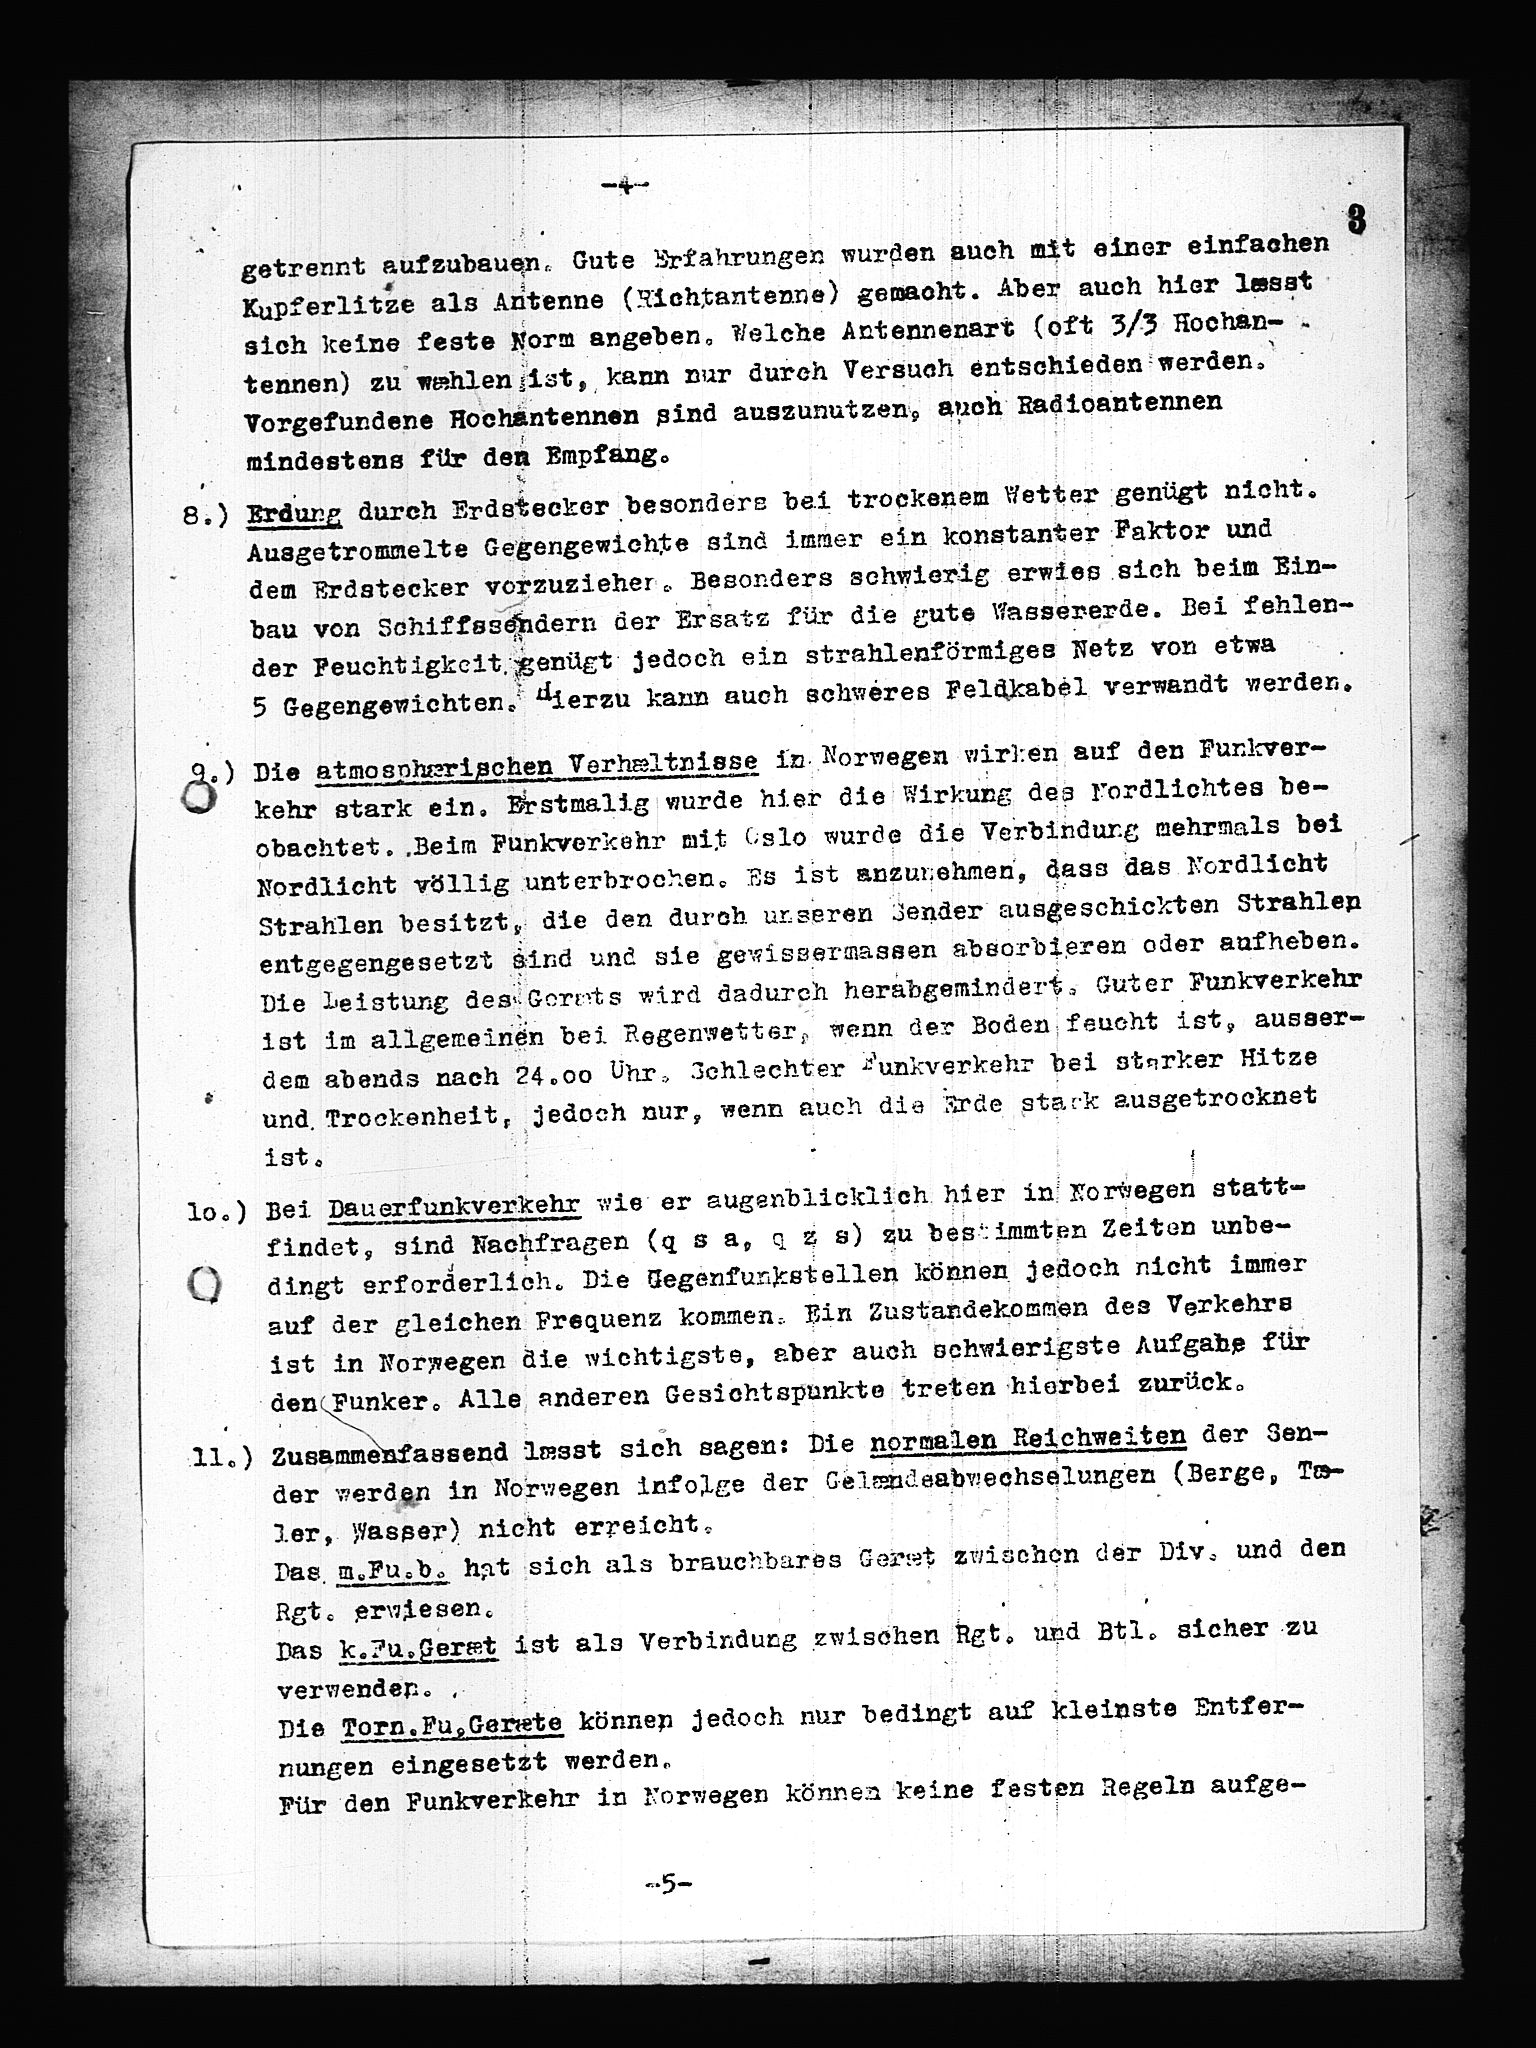 Documents Section, RA/RAFA-2200/V/L0082: Amerikansk mikrofilm "Captured German Documents".
Box No. 721.  FKA jnr. 619/1954., 1940, p. 507